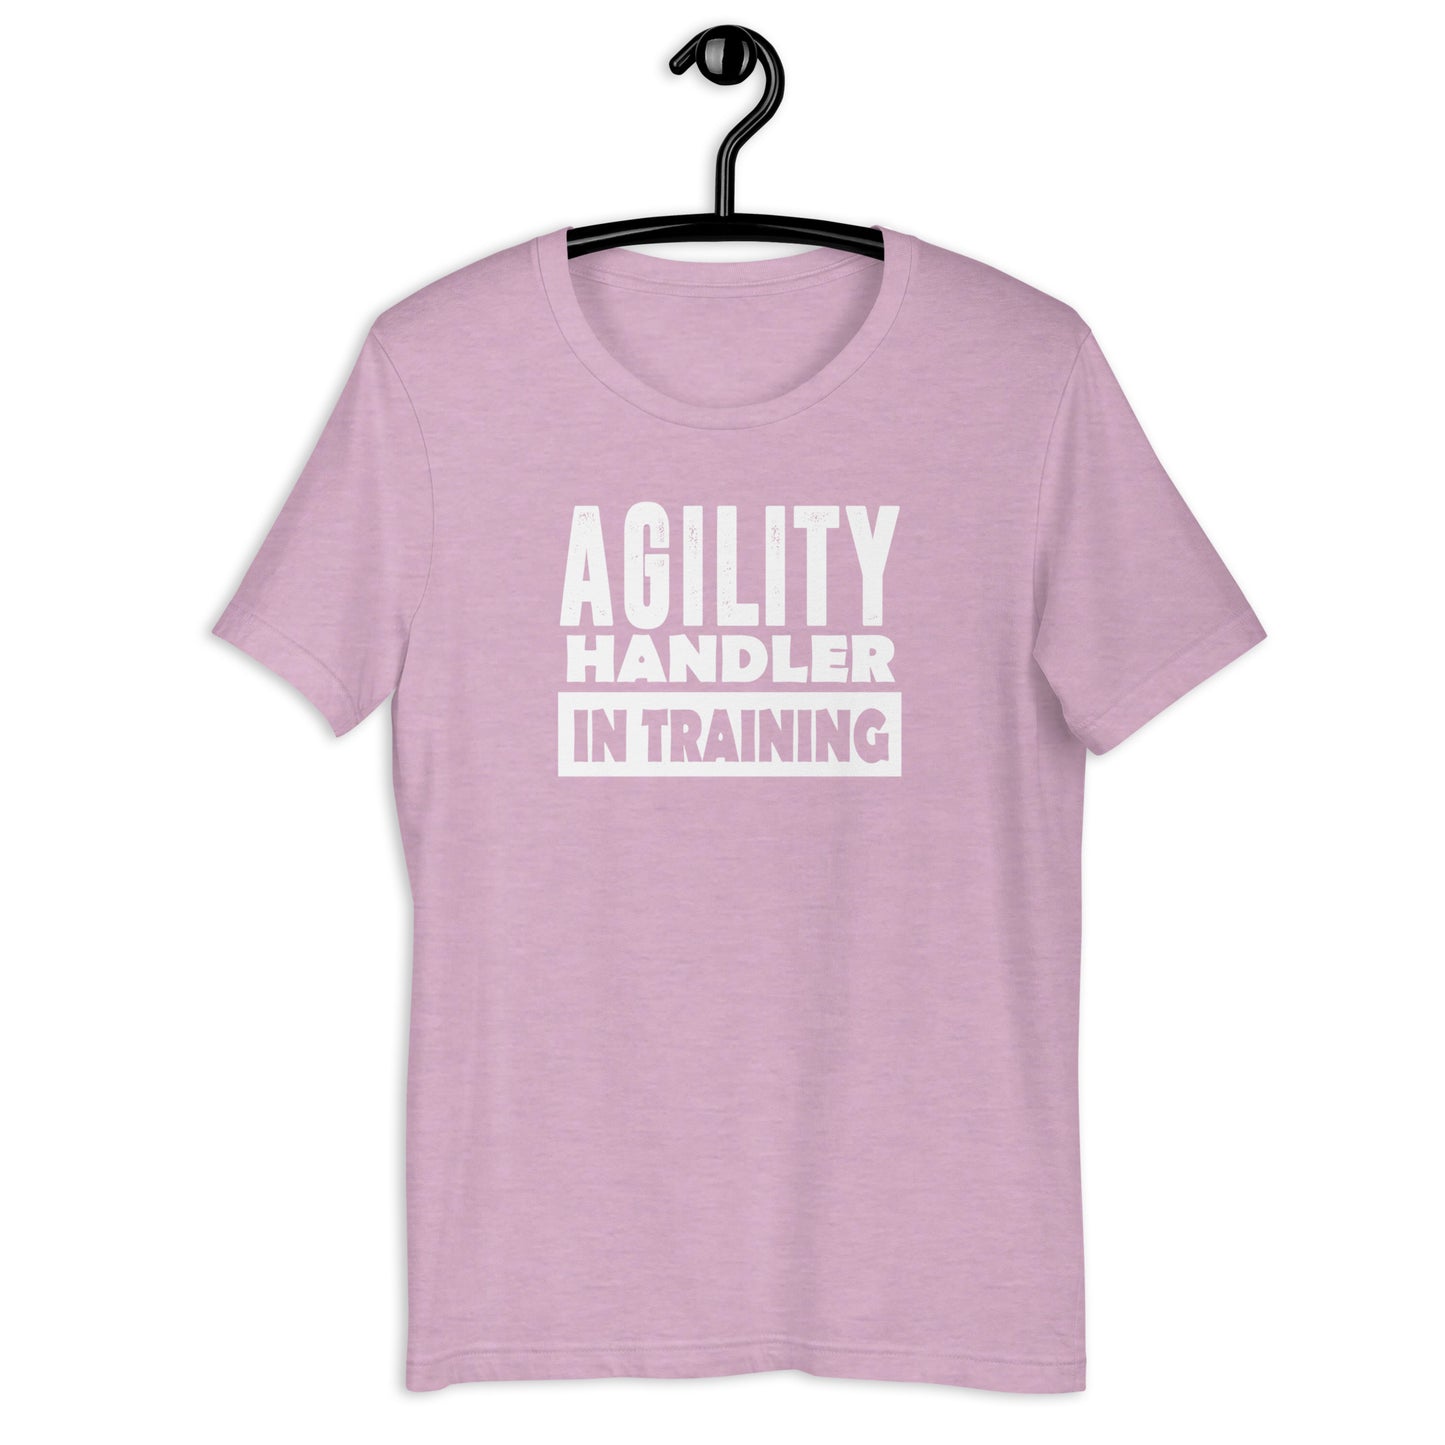 AGILITY HANDLER IN TRAINING - Unisex t-shirt